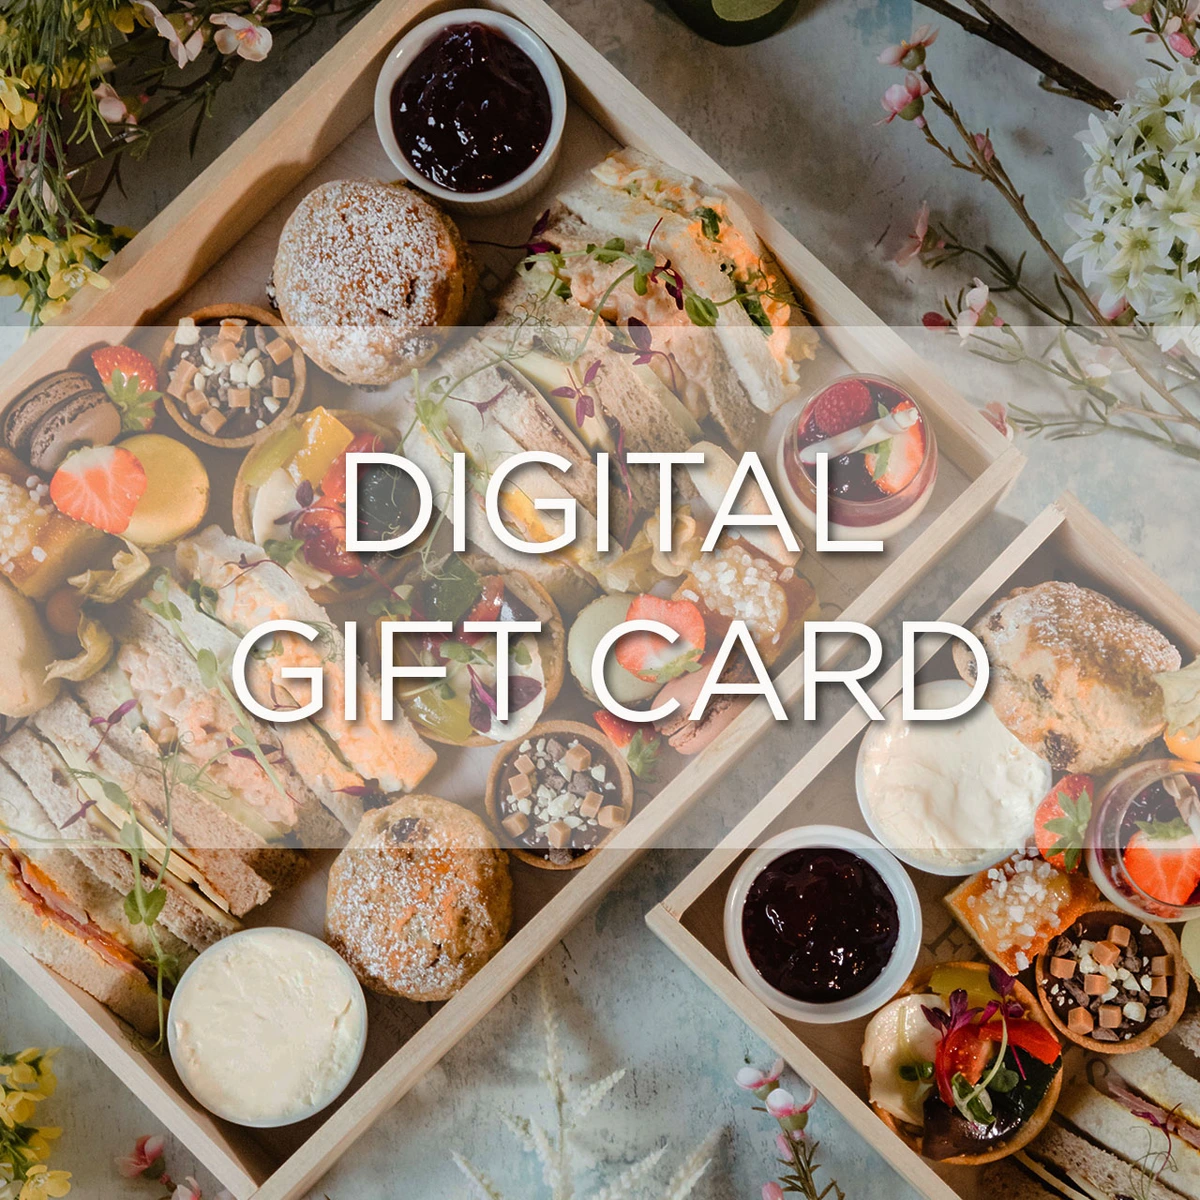 Digital Gift Card - High Tea for One